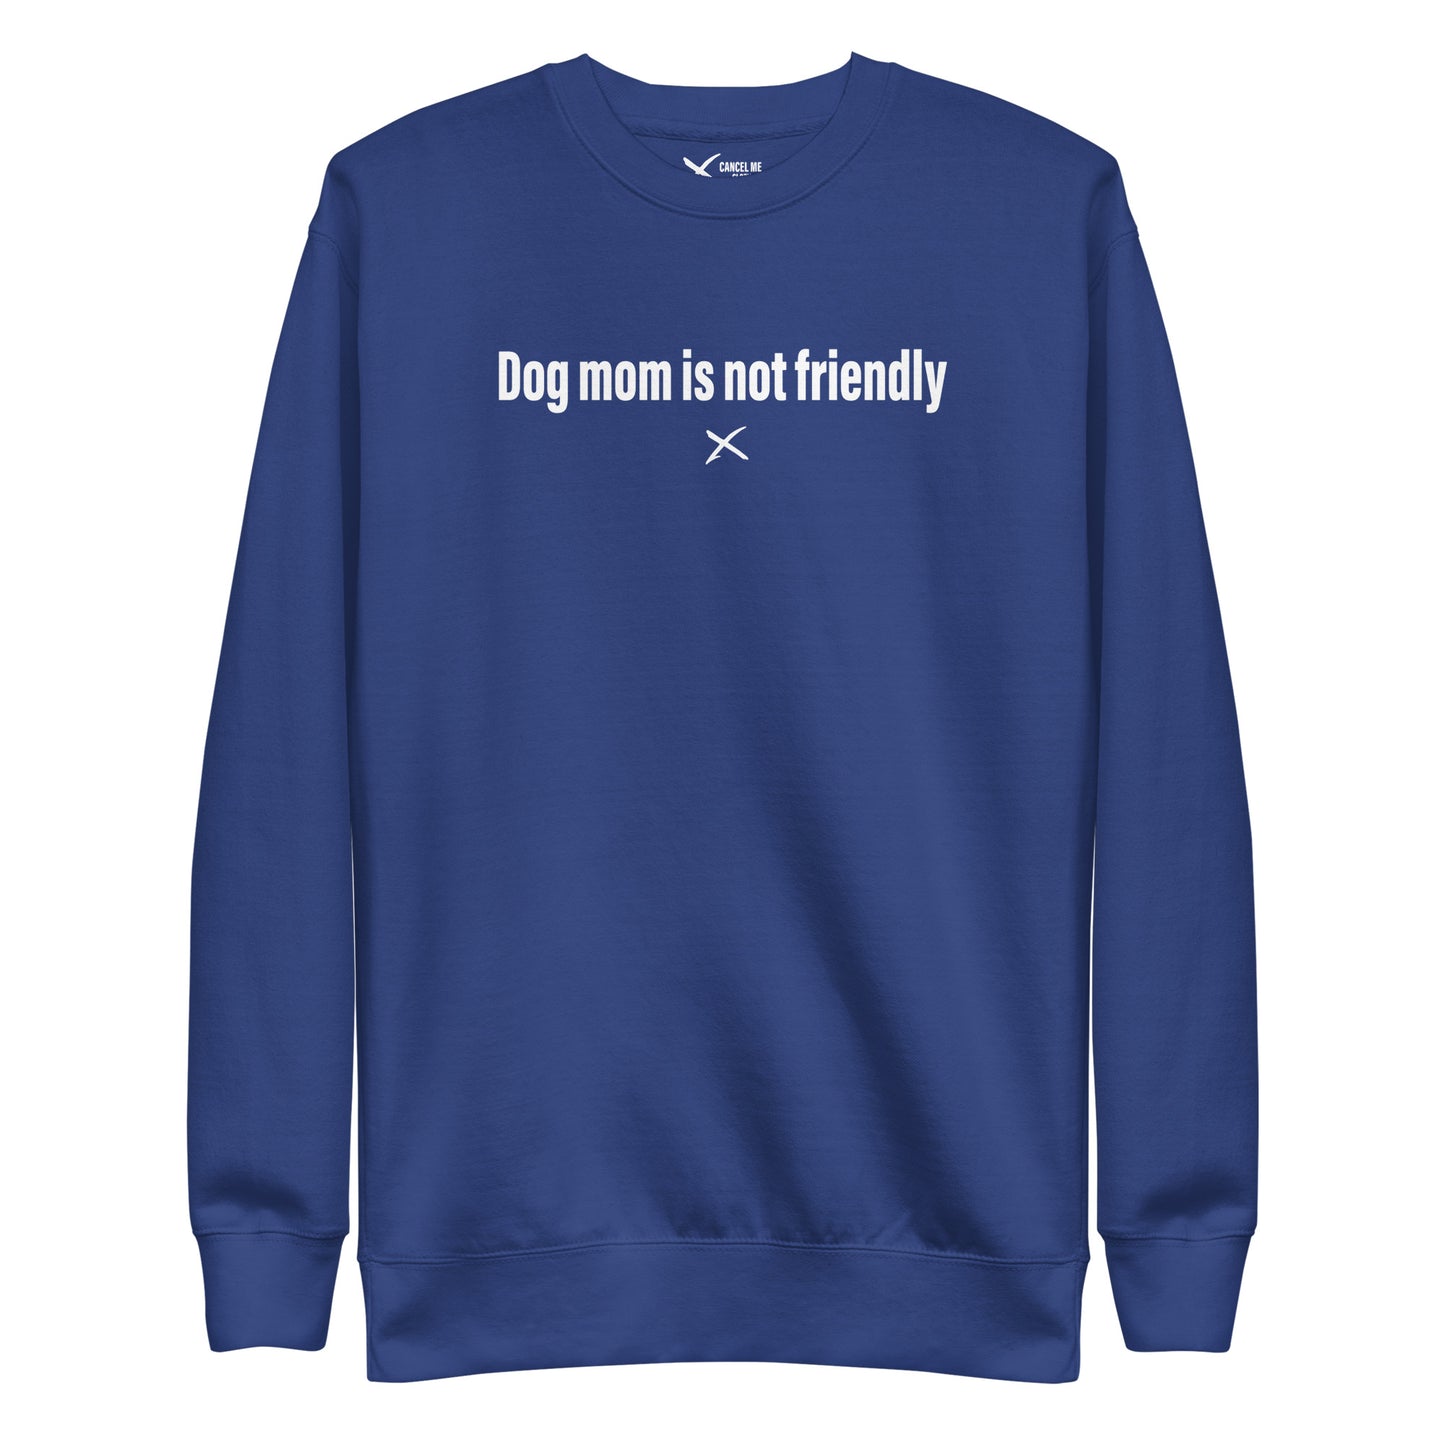 Dog mom is not friendly - Sweatshirt